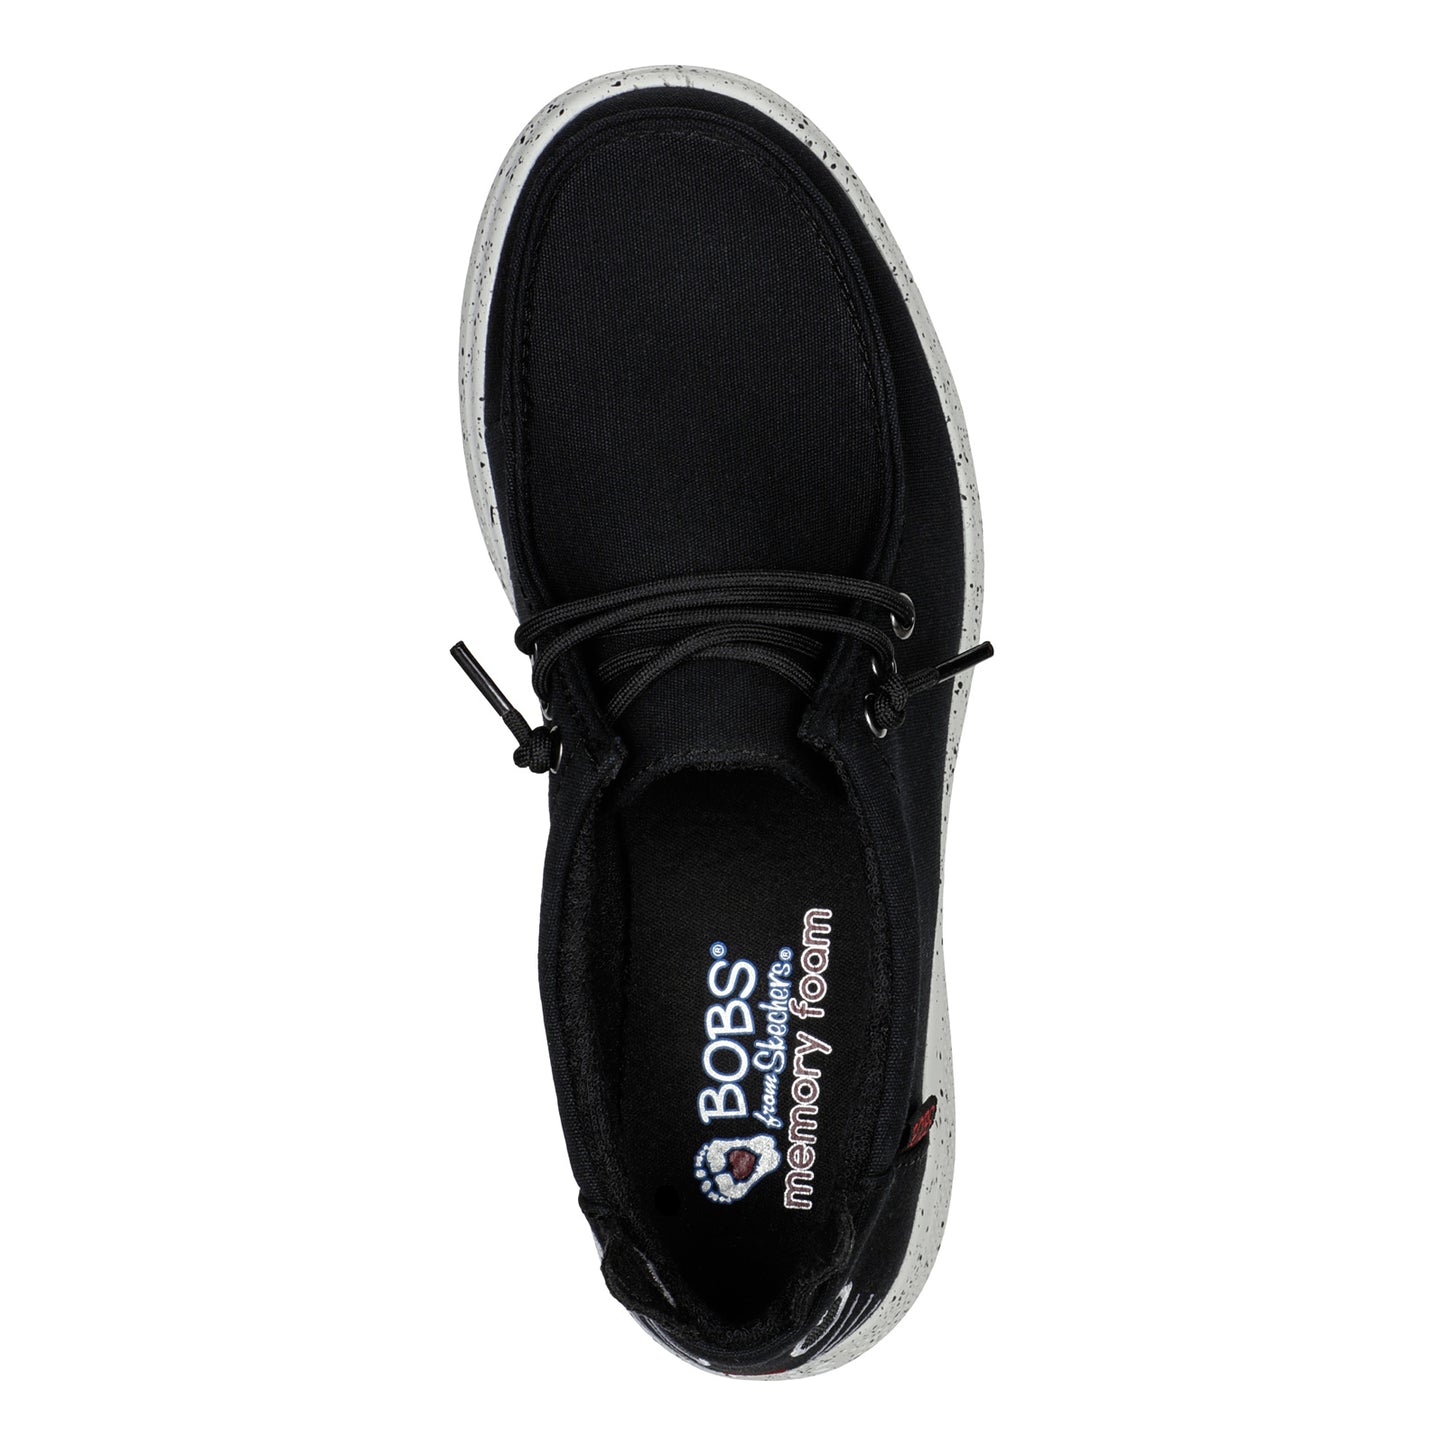 Peltz Shoes  Women's Skechers BOBS Skipper - Meow Casuals Slip-On BLACK 114179-BLK